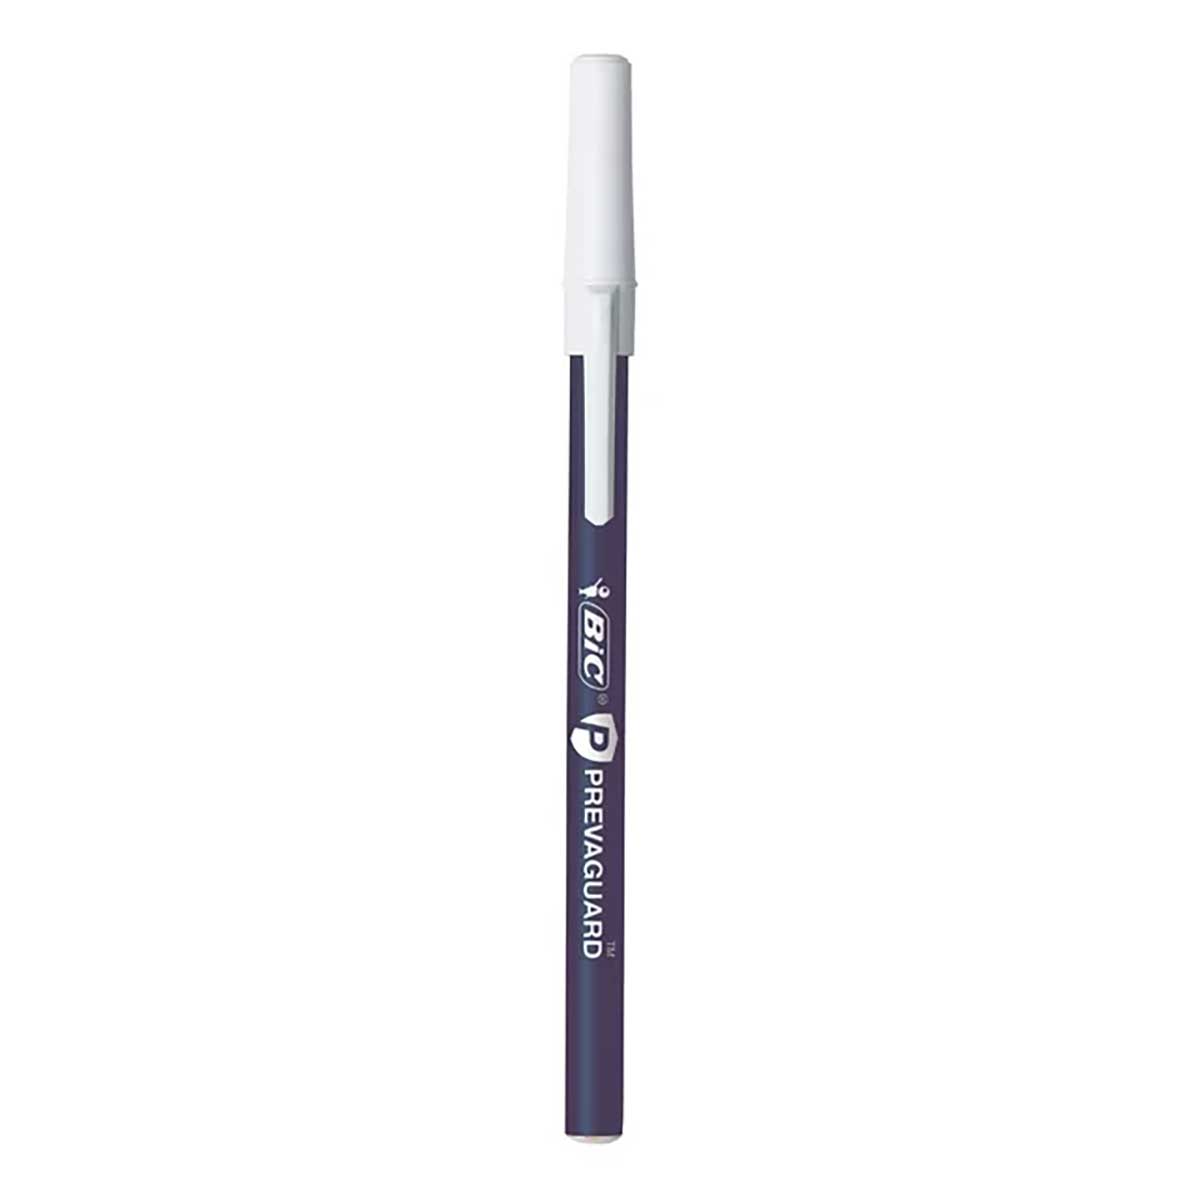 Bic Prevaguard Round Stick Blue Pens Medium Smooth Writing 60 Pack